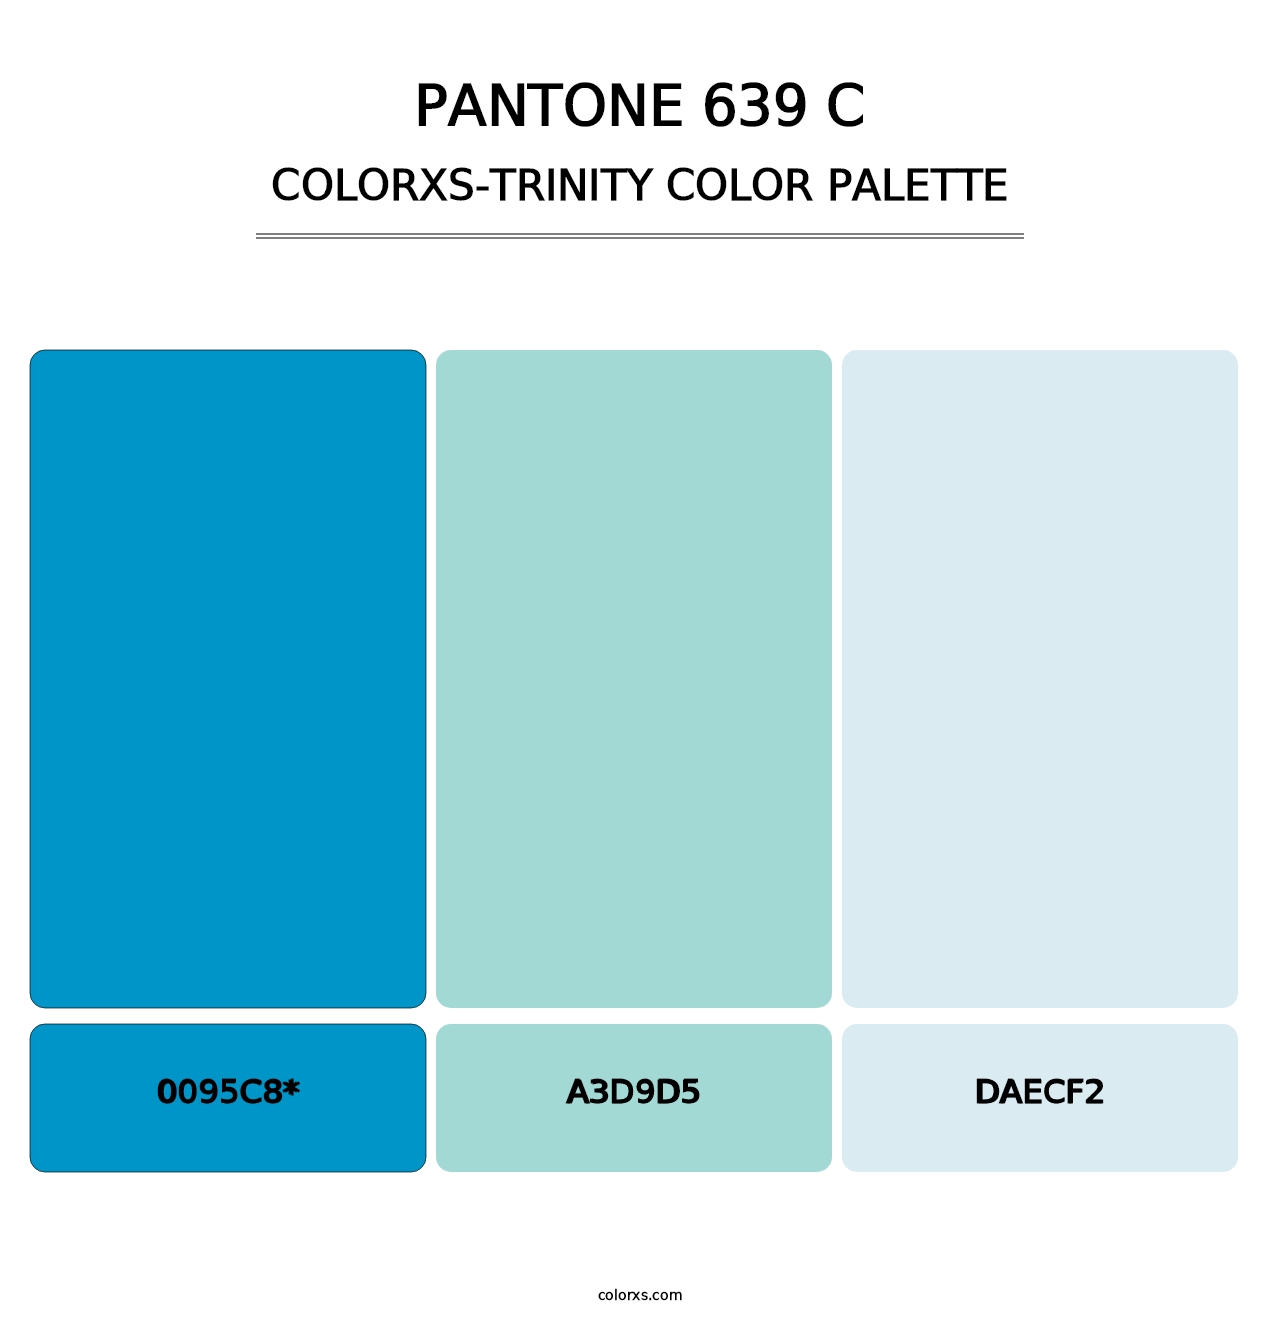 PANTONE 639 C - Colorxs Trinity Palette